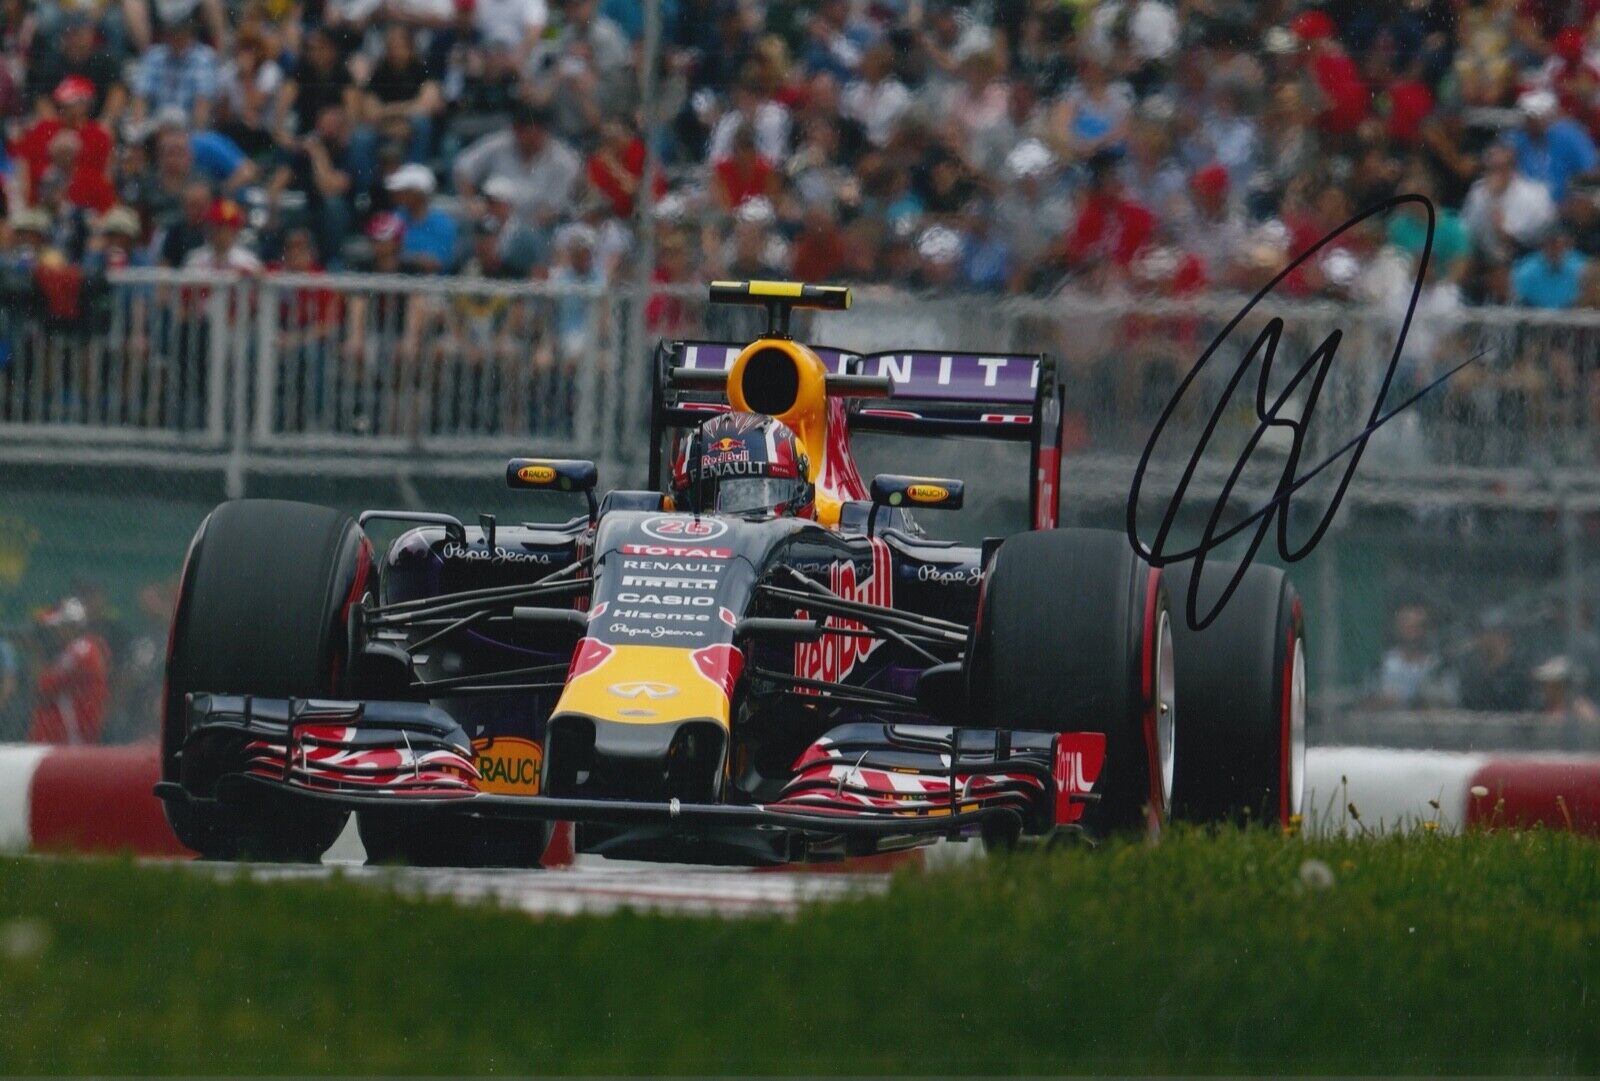 Daniil Kvyat Hand Signed 12x8 Photo Poster painting F1 Autograph Red Bull Racing 10